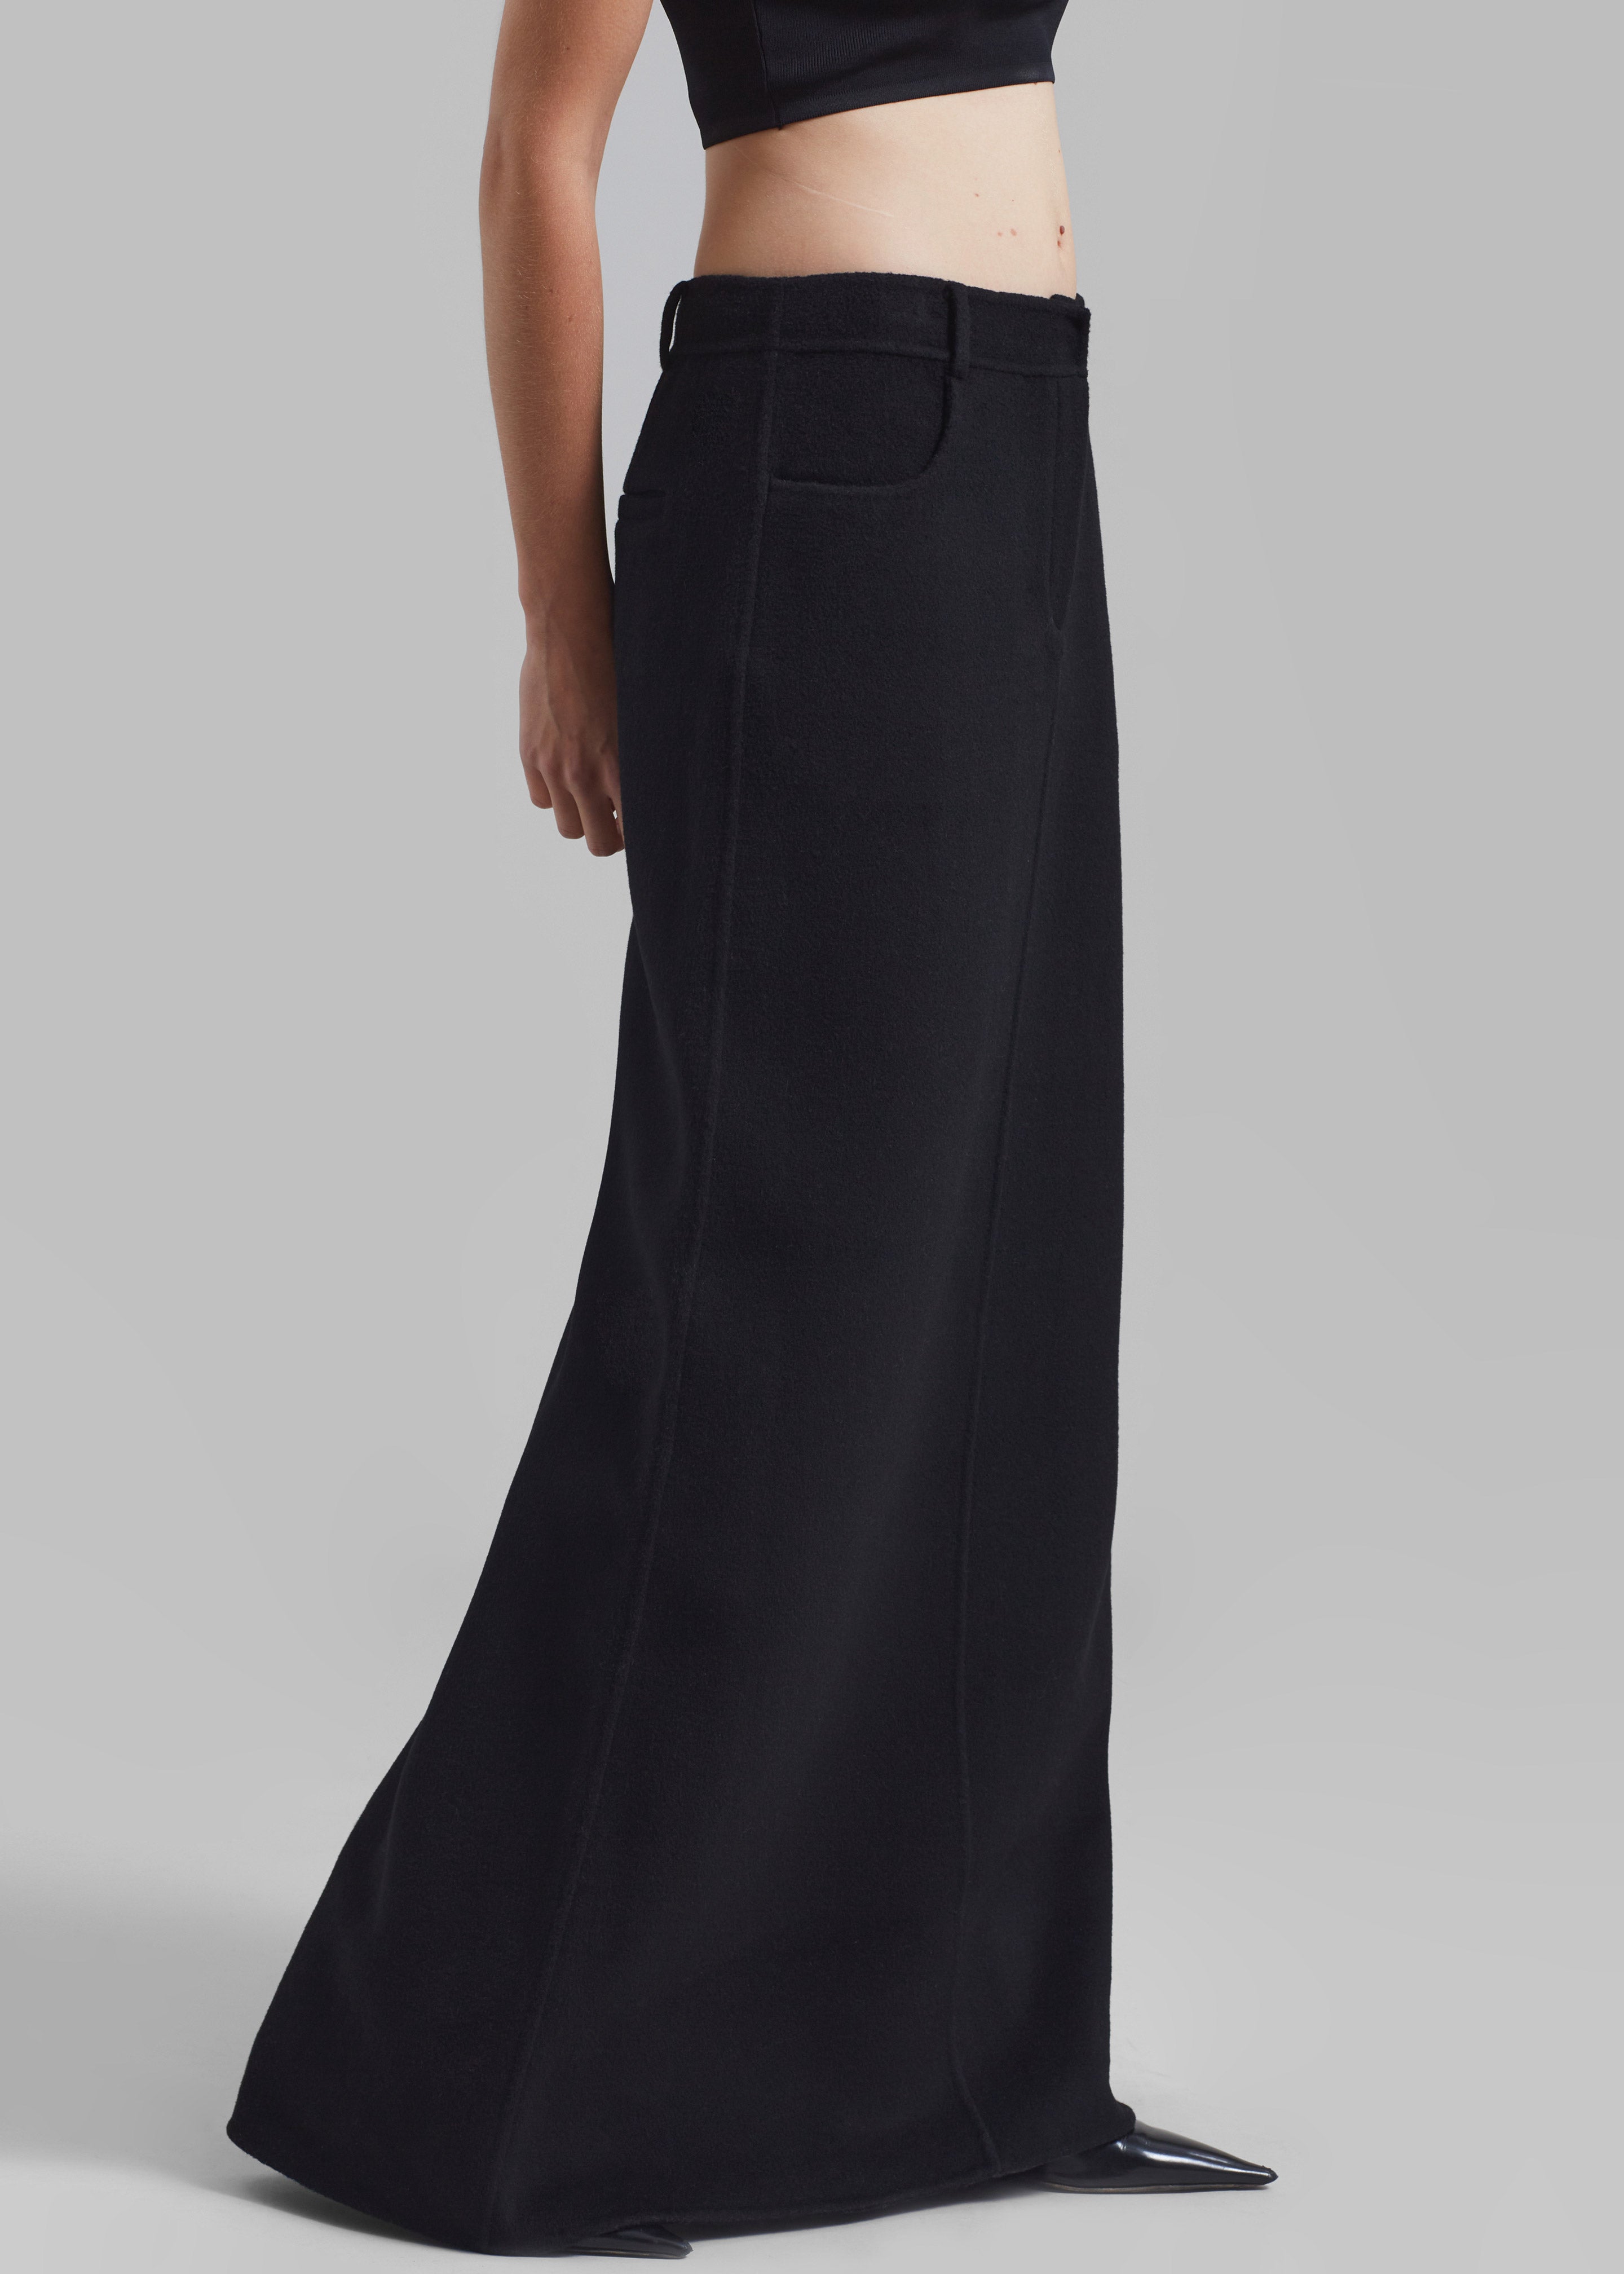 Malvo Long Wool Pencil Skirt - Black - 2